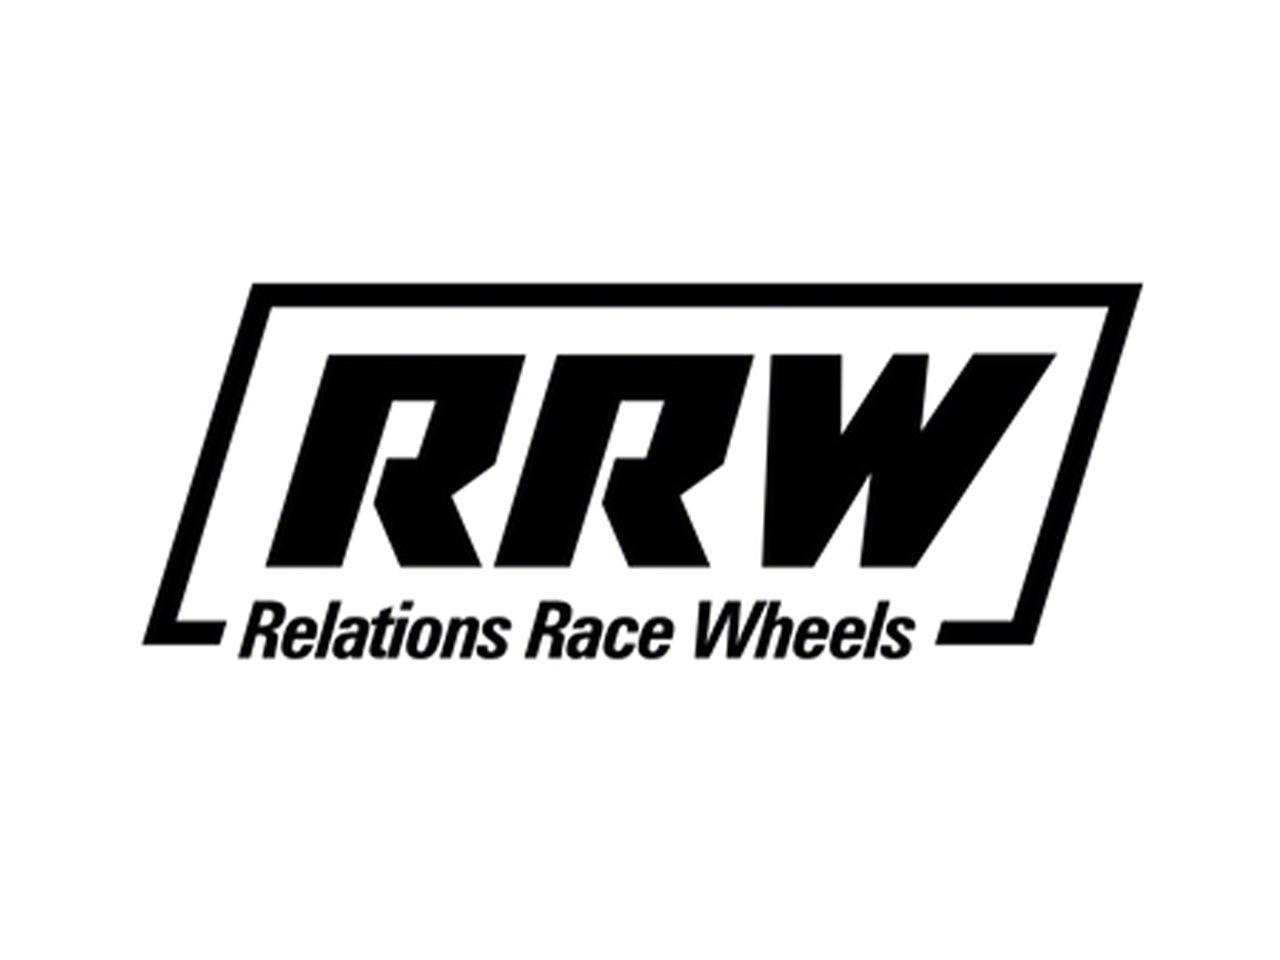 Relations Race Wheels Parts